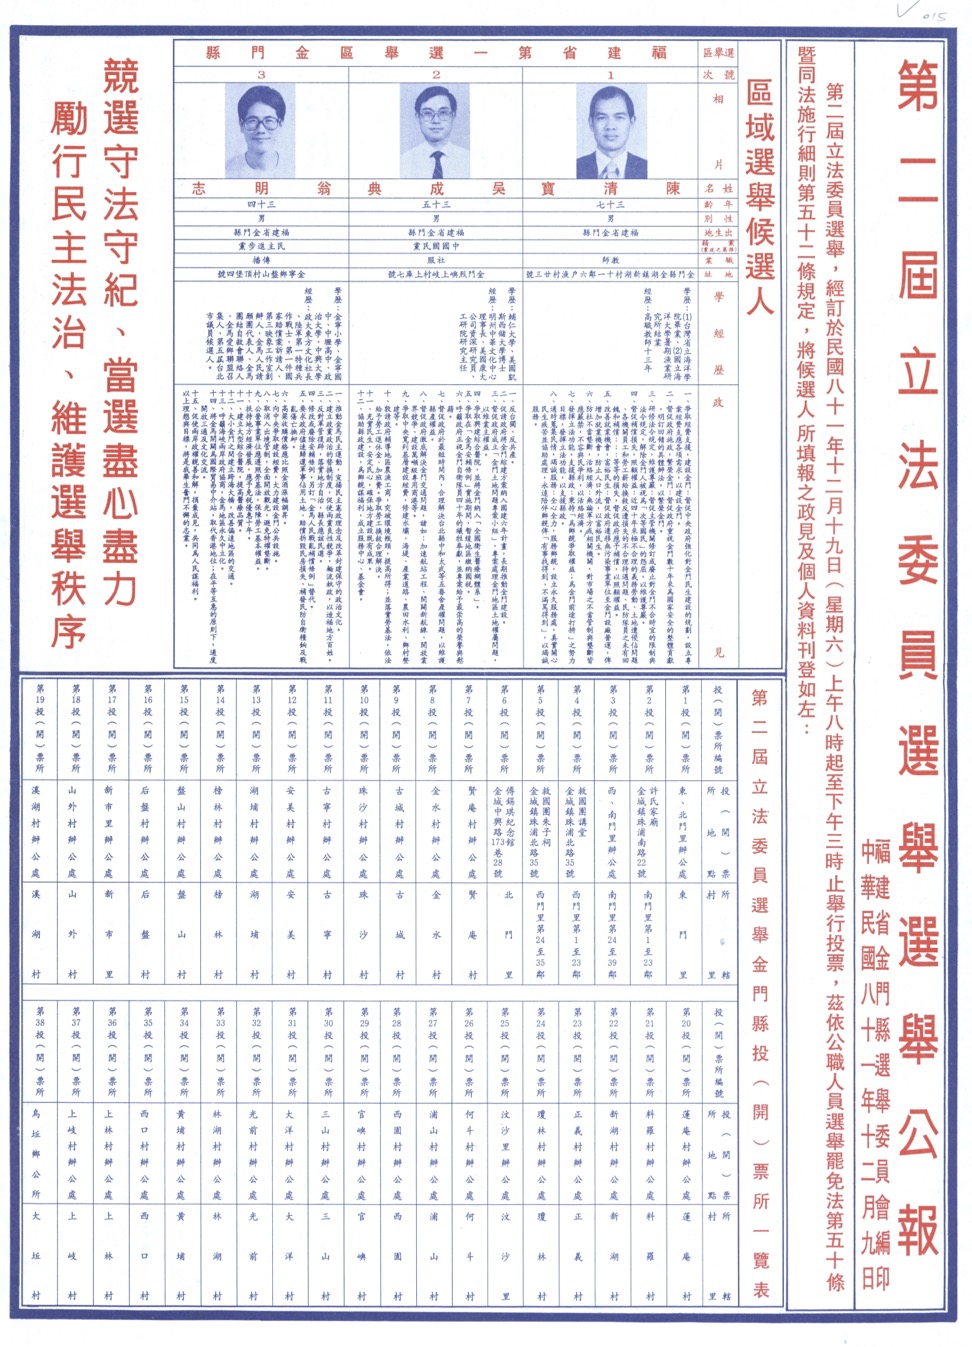 December 1991, the bulletin of the Kinmen County Second Legislative Yuan election.